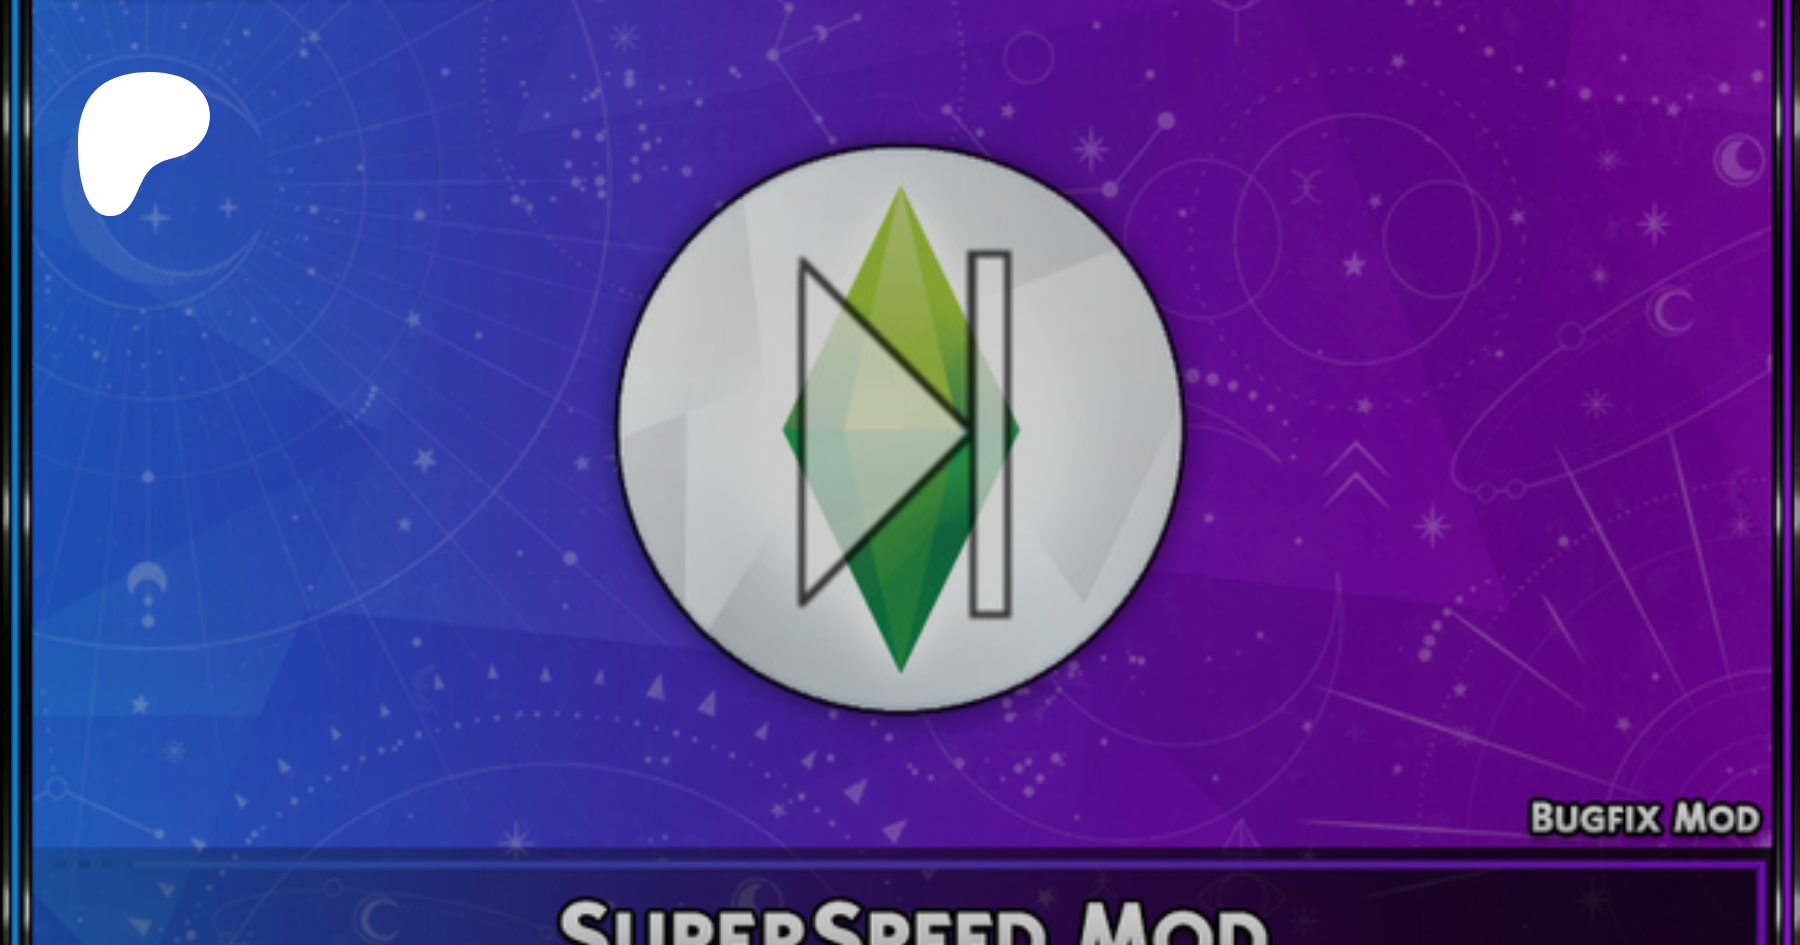 SuperSpeed Mod